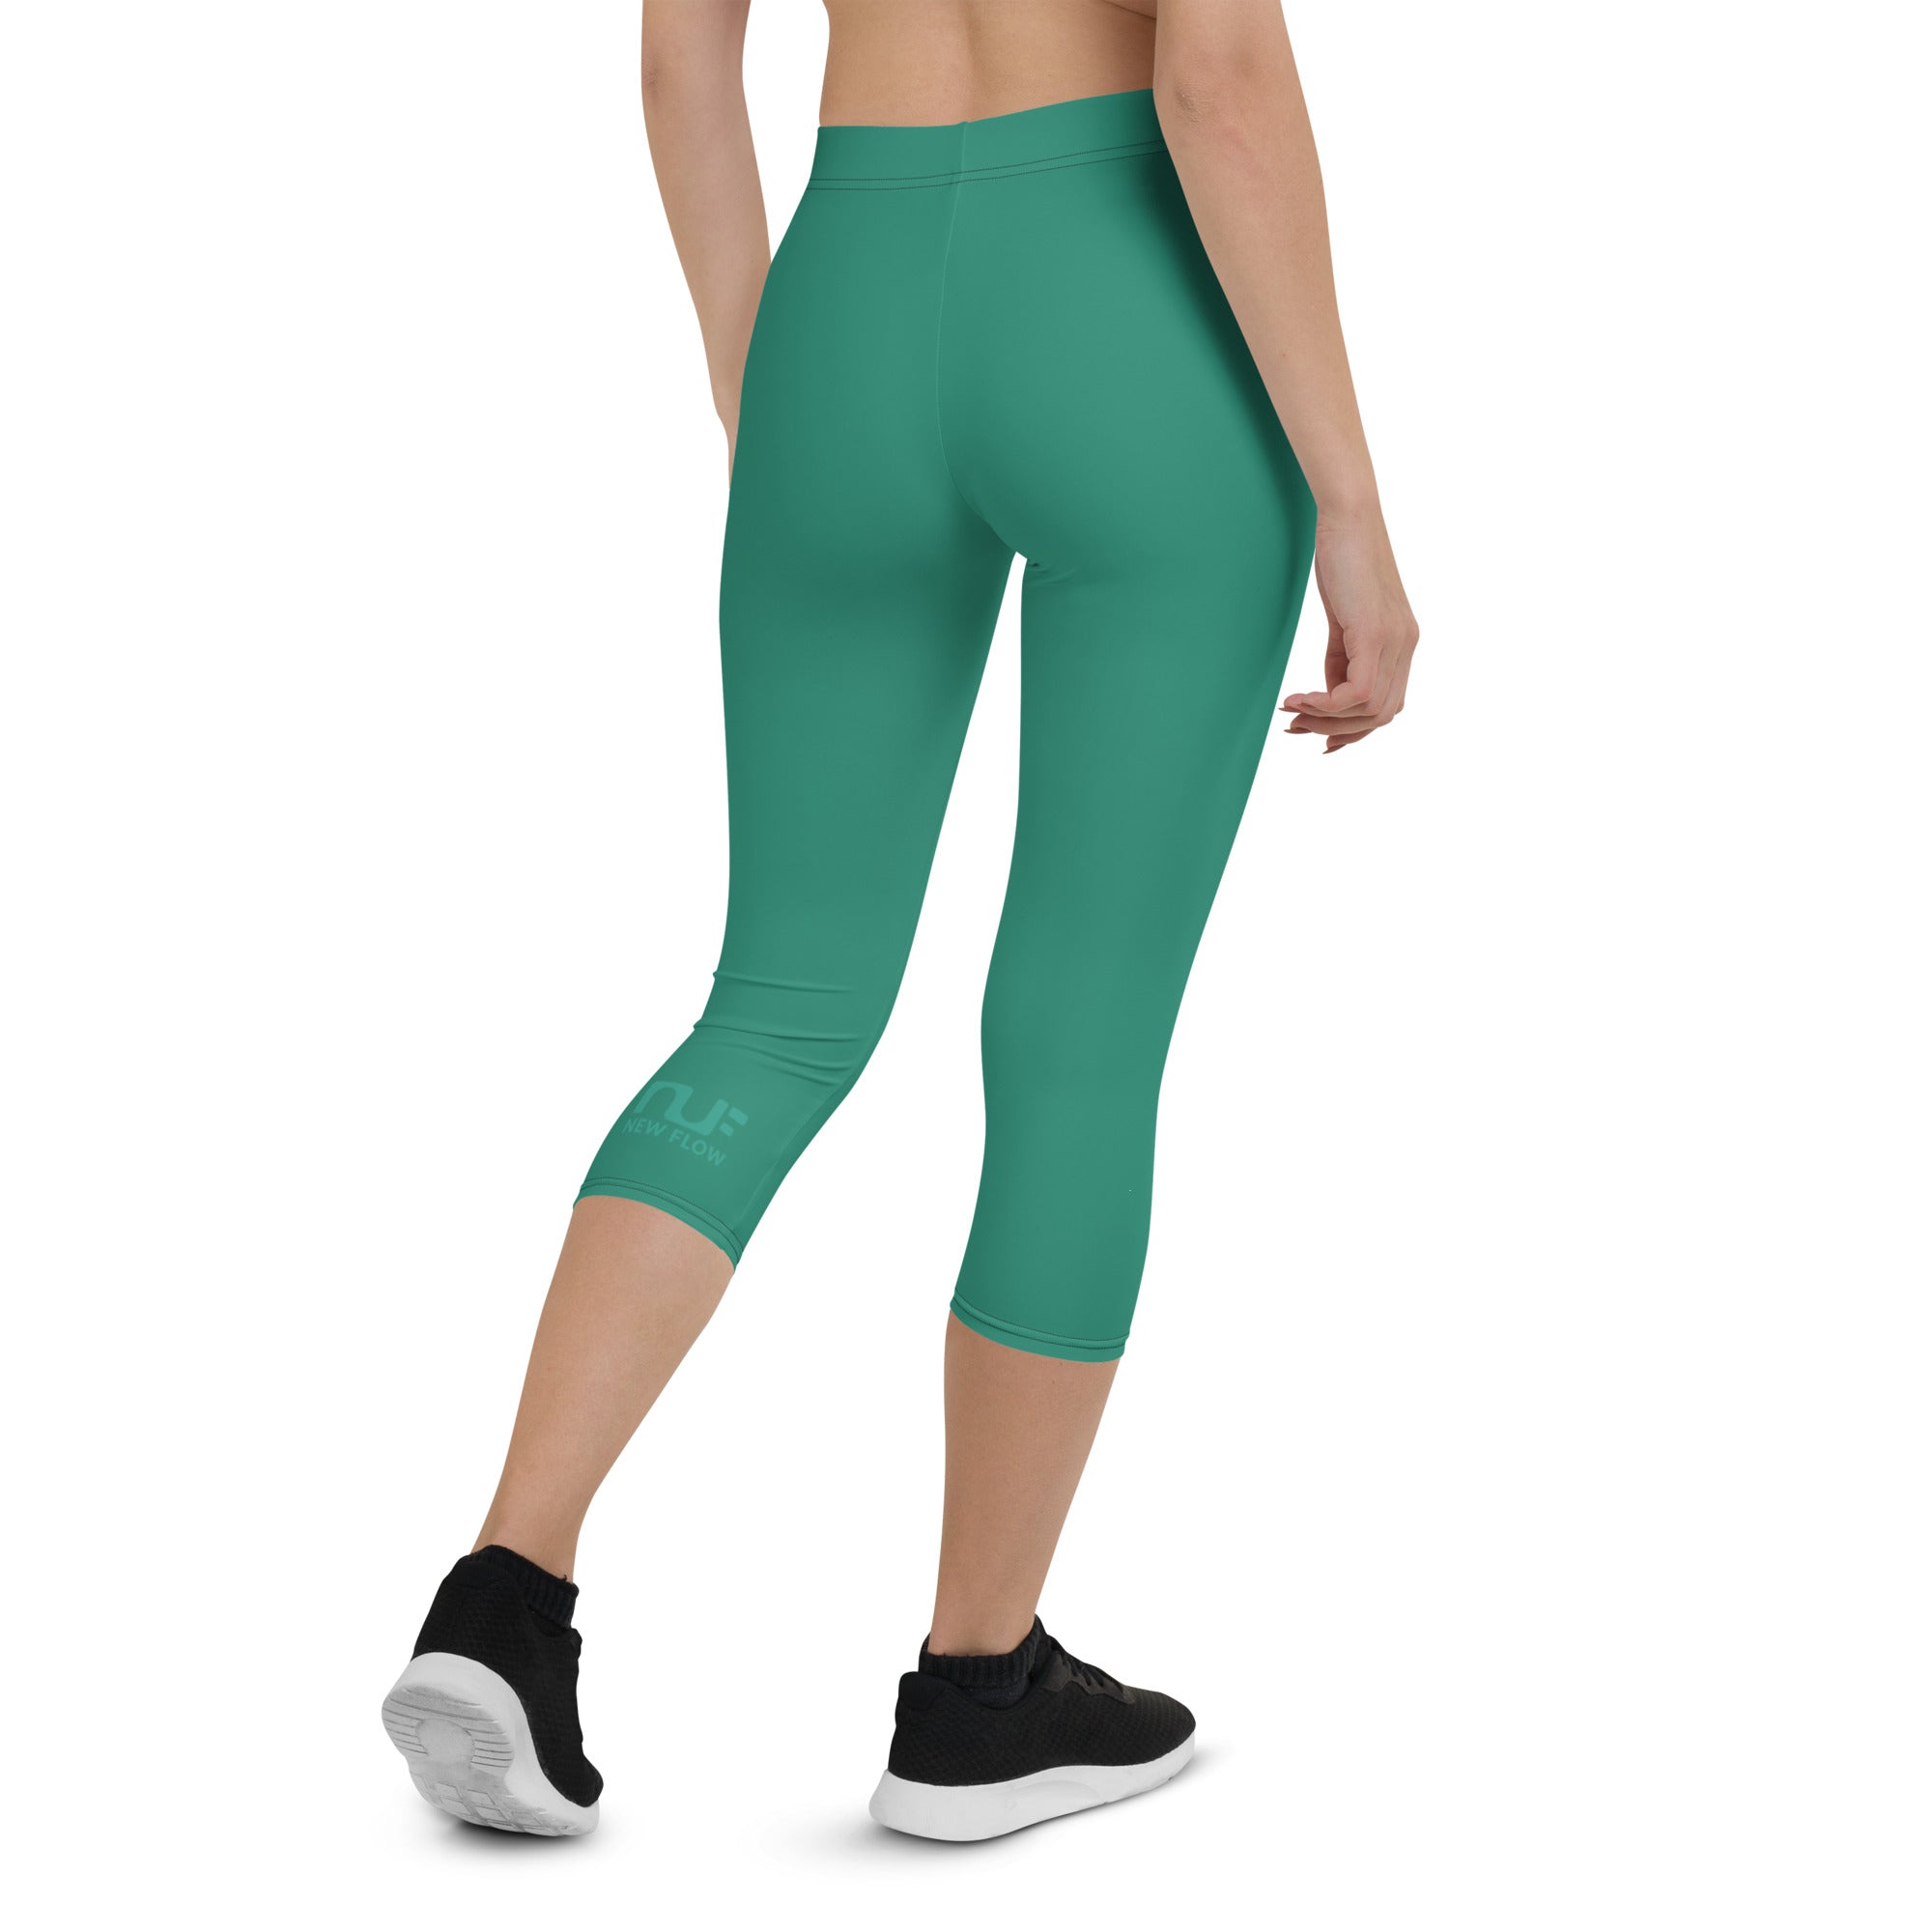 Sgrib - design 123 - Women's Fashion Yoga Capri Leggings - xs-xl